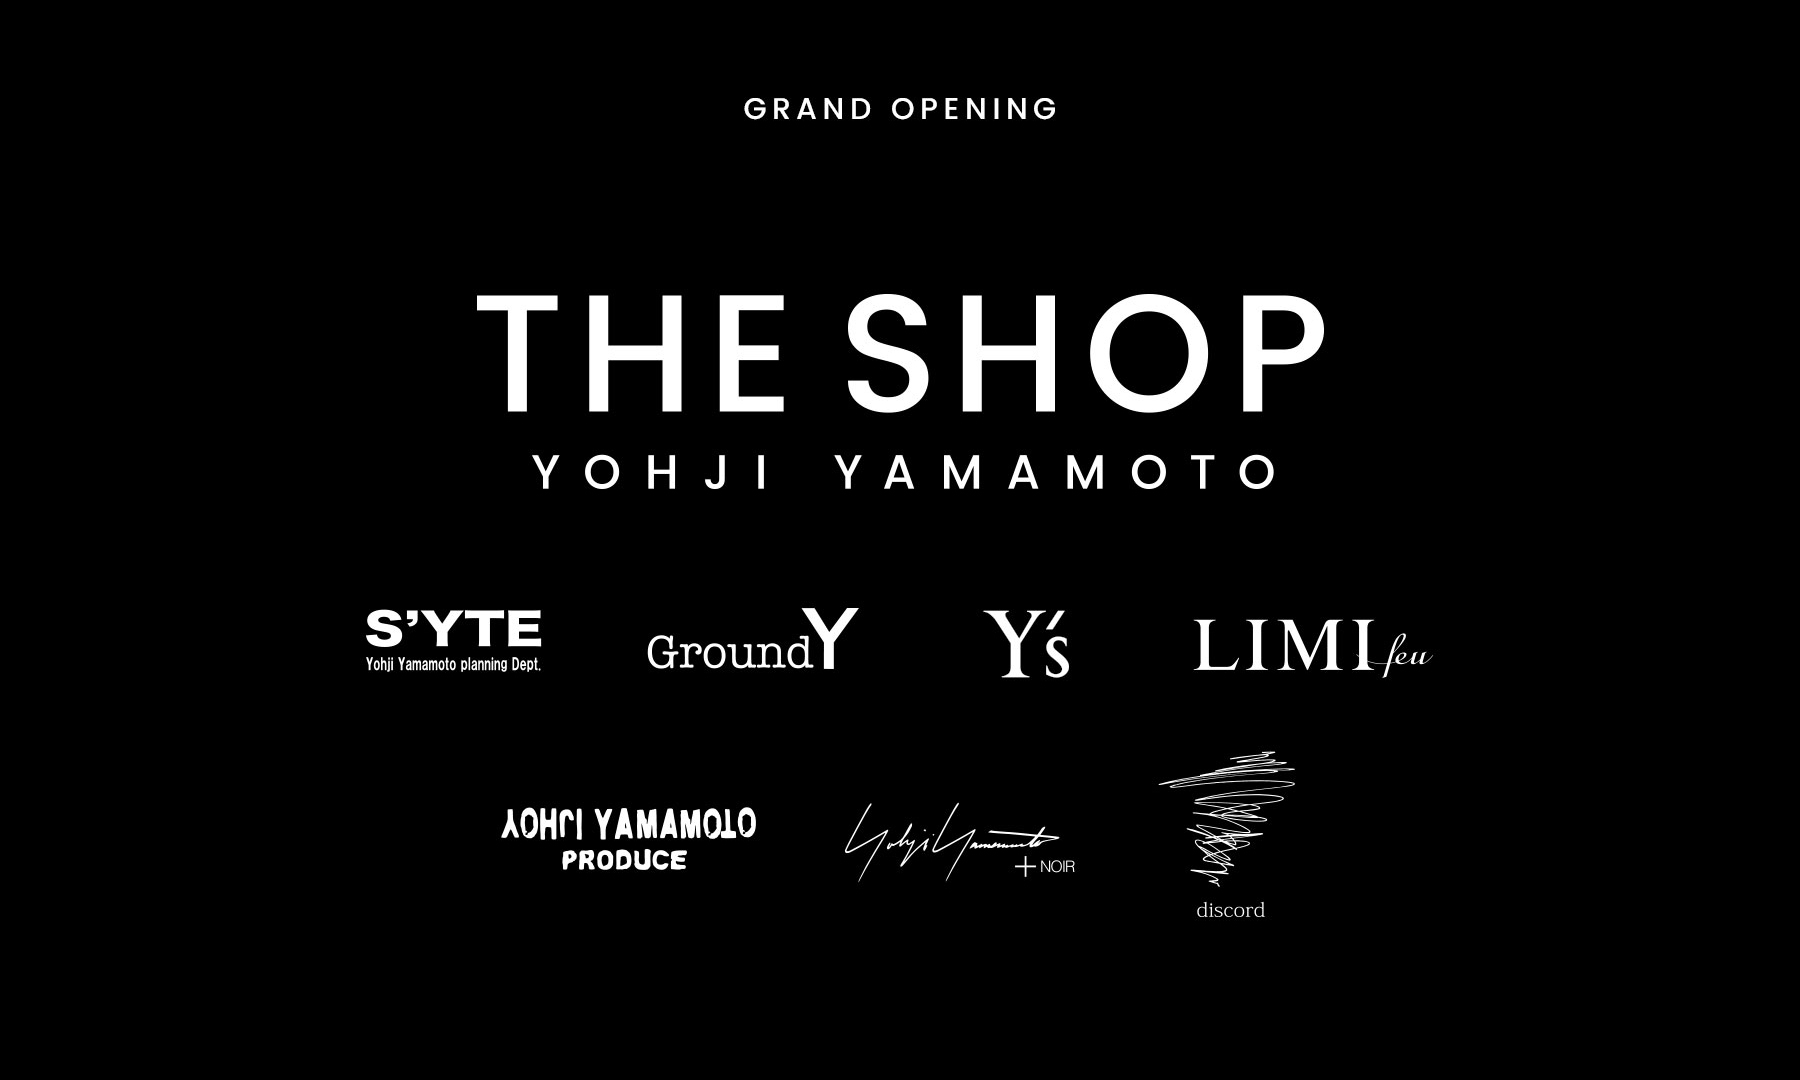 Yohji Yamamoto Inc. 官方全球电商 “The Shop” 上线